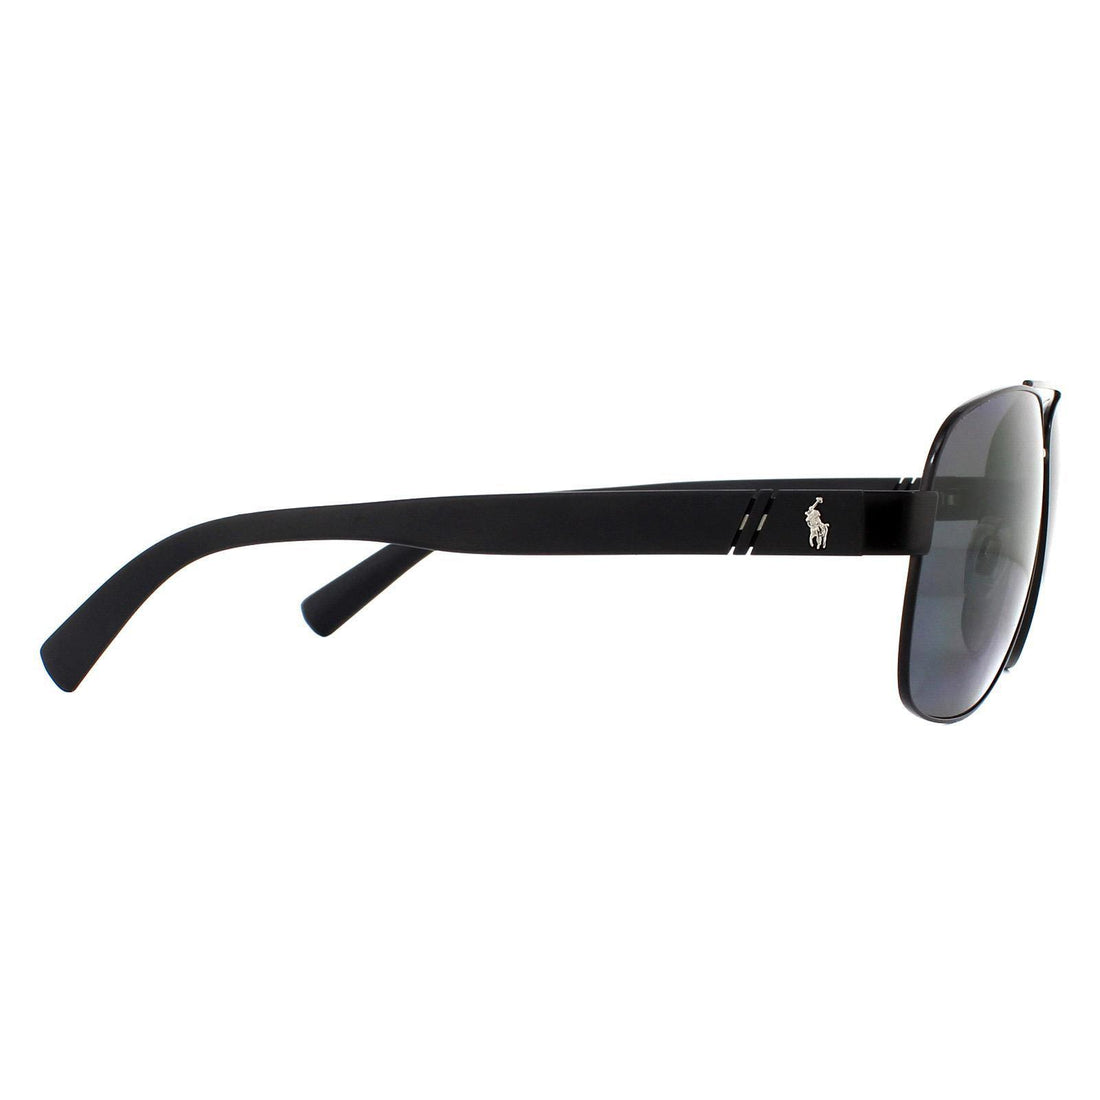 Polo Ralph Lauren Sunglasses PH3110 926781 Semi Shiny Black Grey Polarized